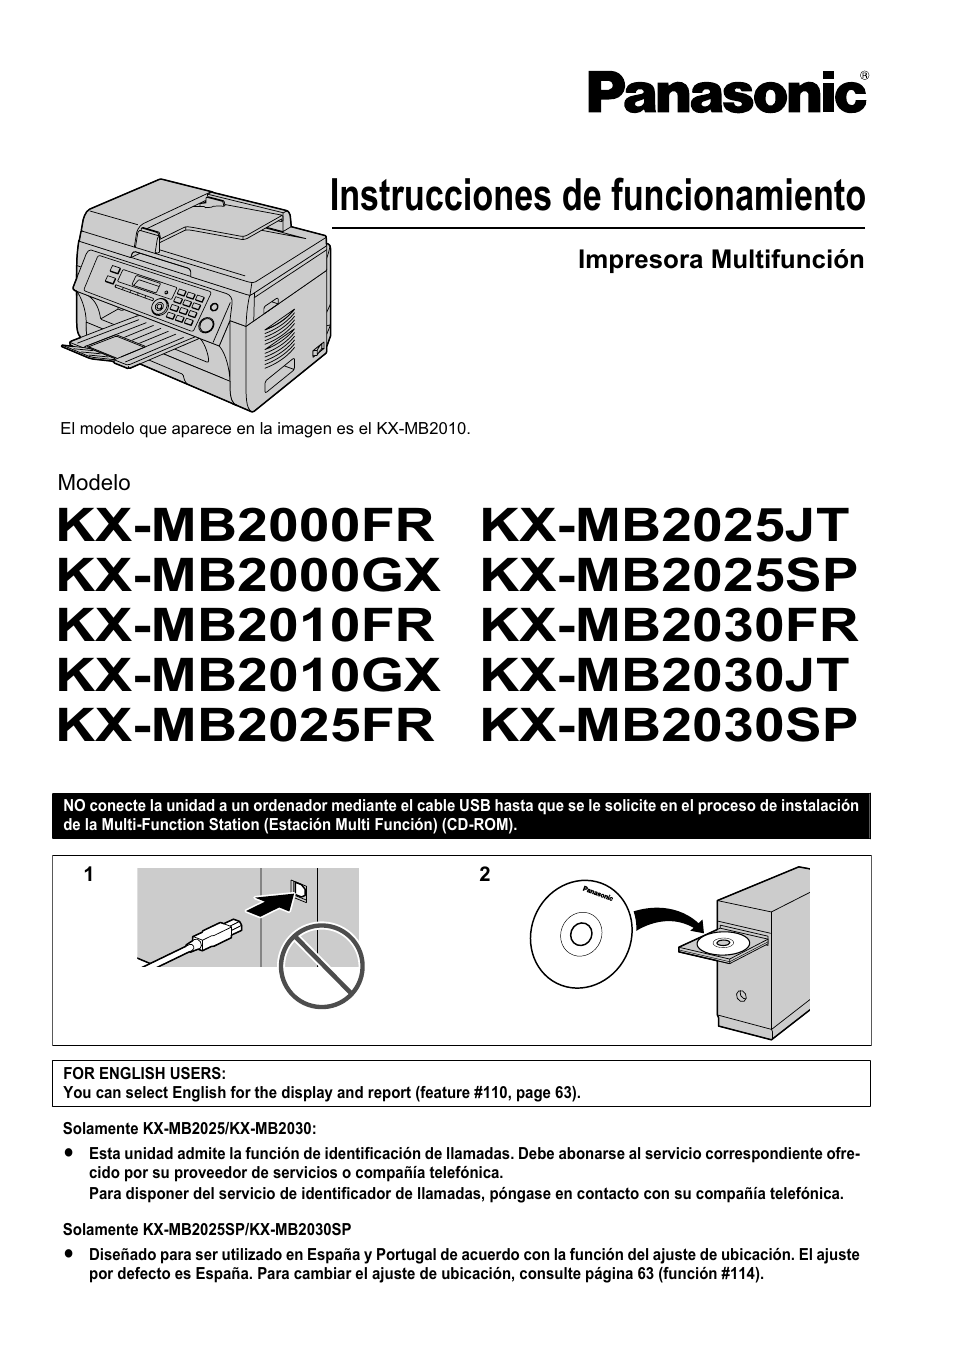 Panasonic KXMB2010GX Manual del usuario | Páginas: 128